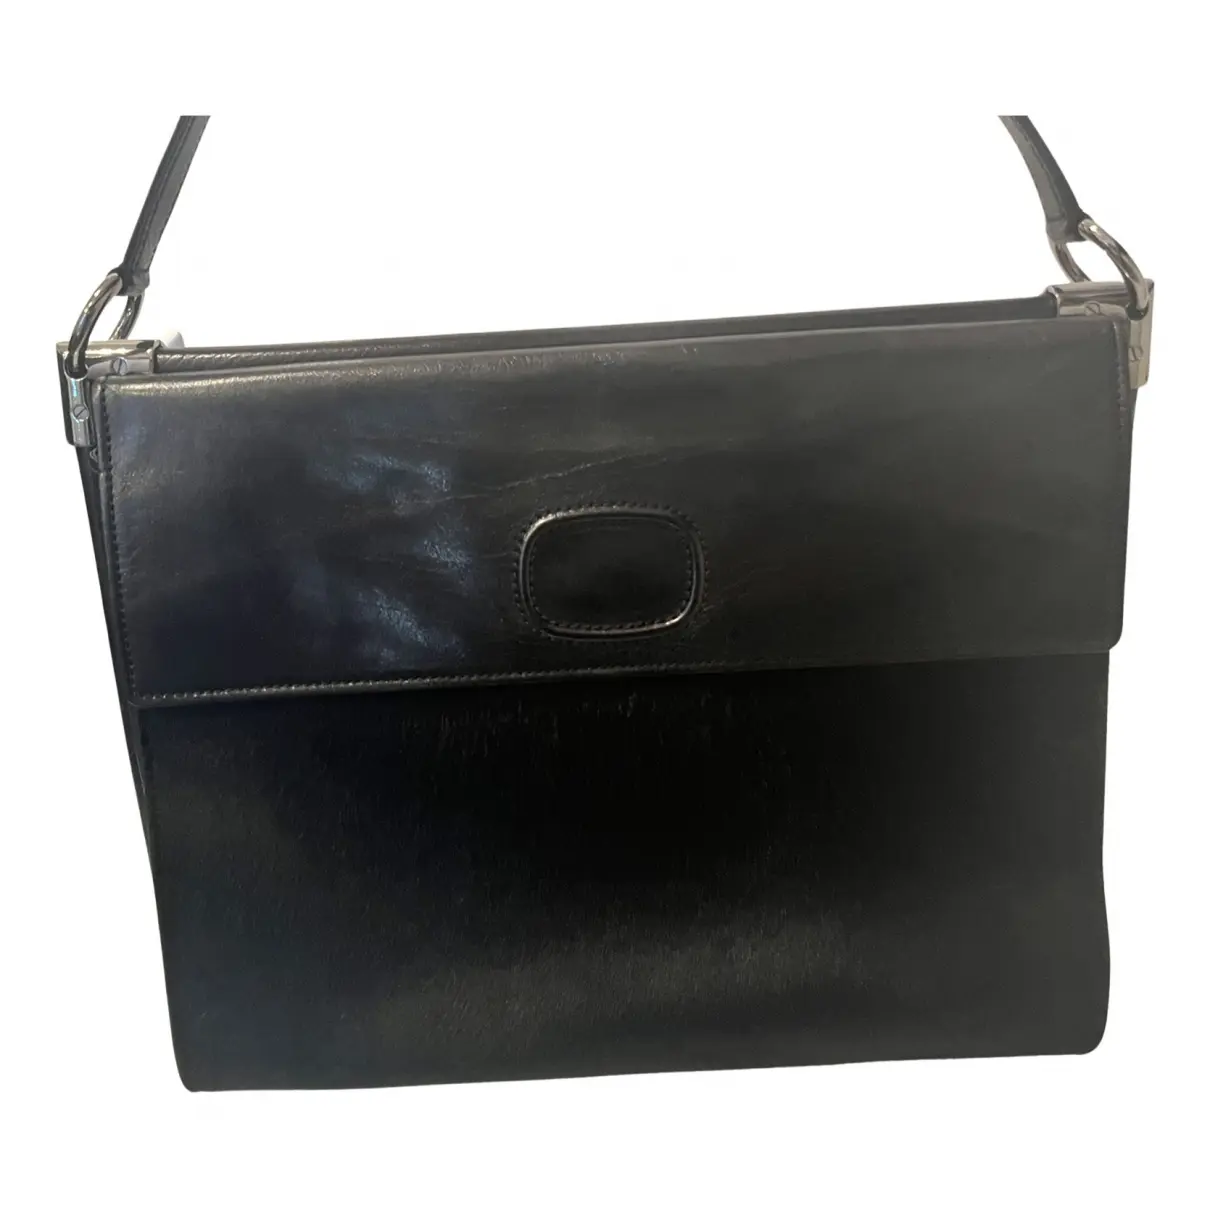 Mini sac viv sellier pony-style calfskin handbag Roger Vivier